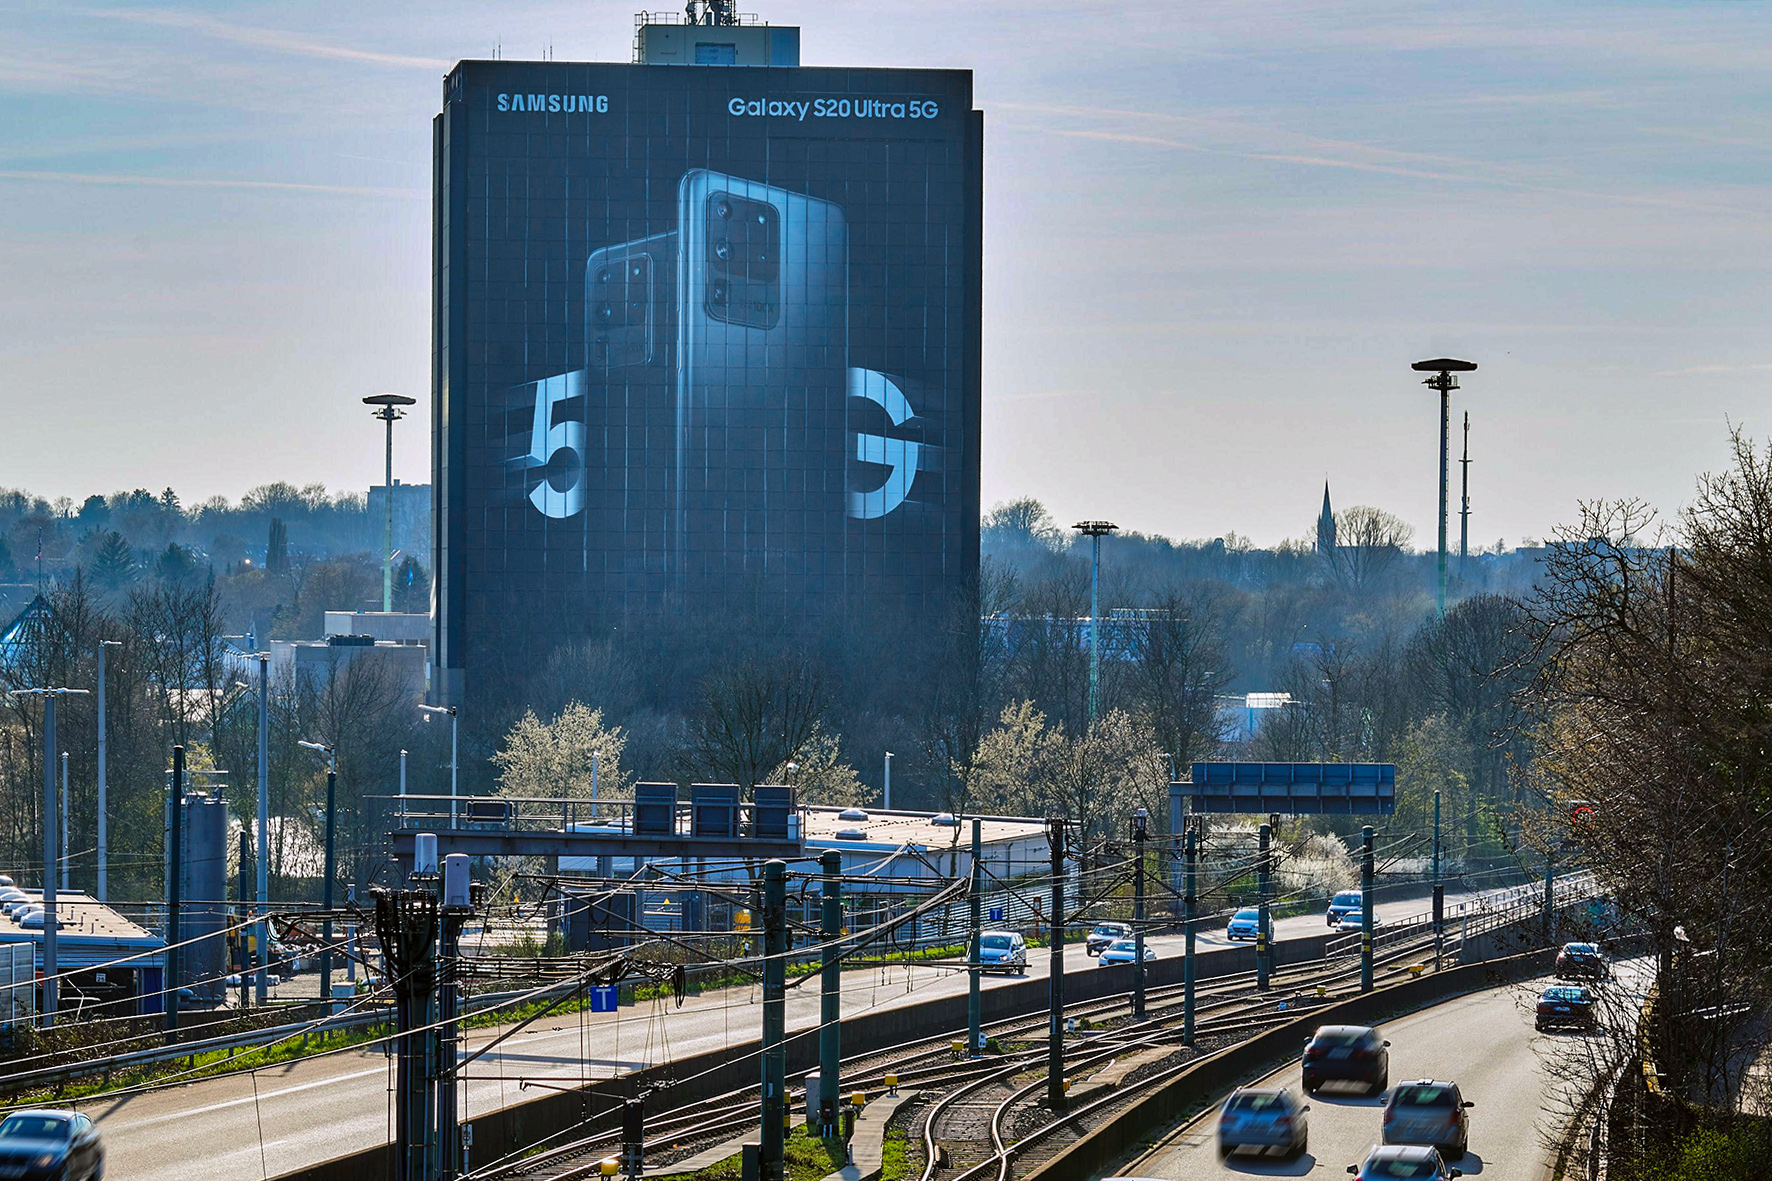 Samsung_Mühlheim an der Ruhr_A40 - Rhein Ruhr Tower - Fläche 1 Richtung Duisburg_003.jpg